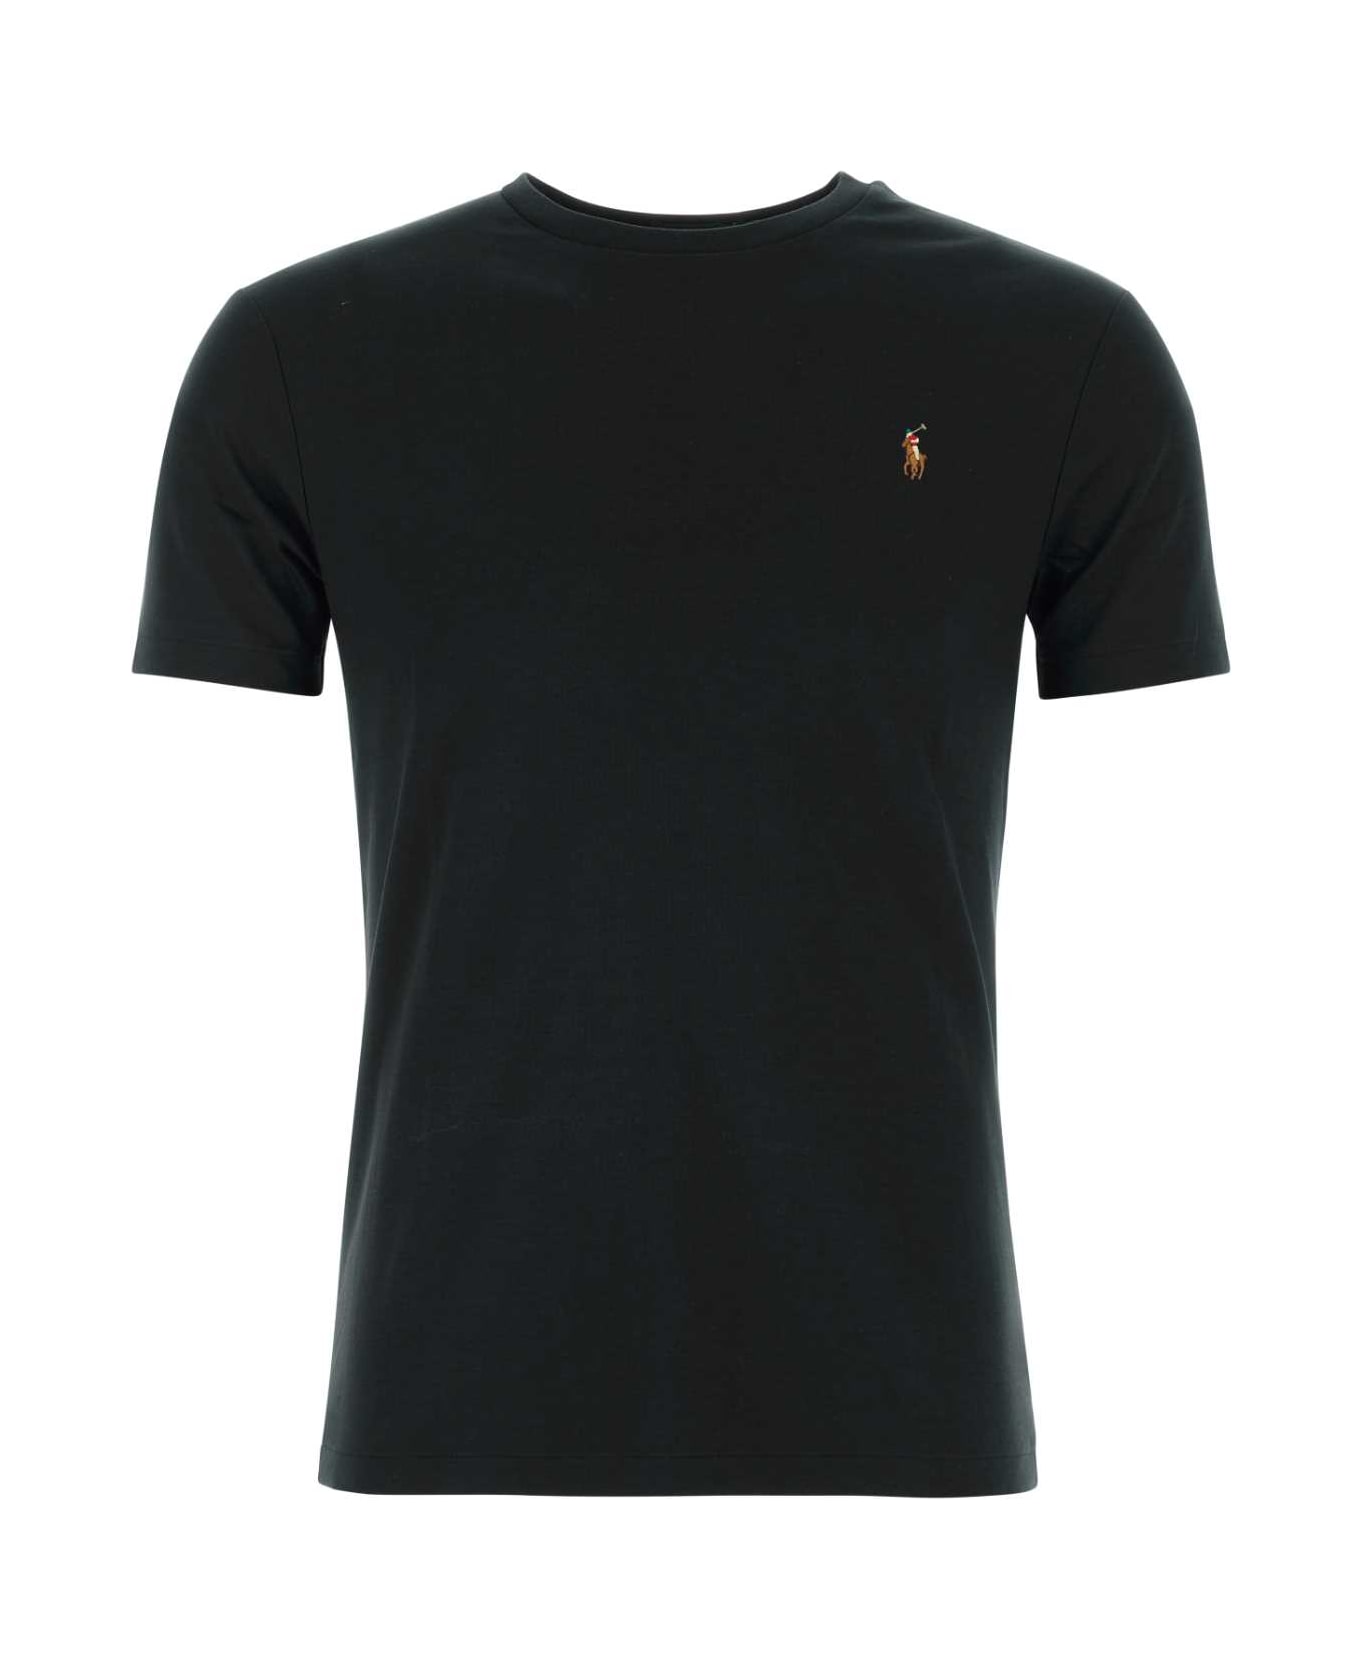 Polo Ralph Lauren Black Cotton T-shirt - 001